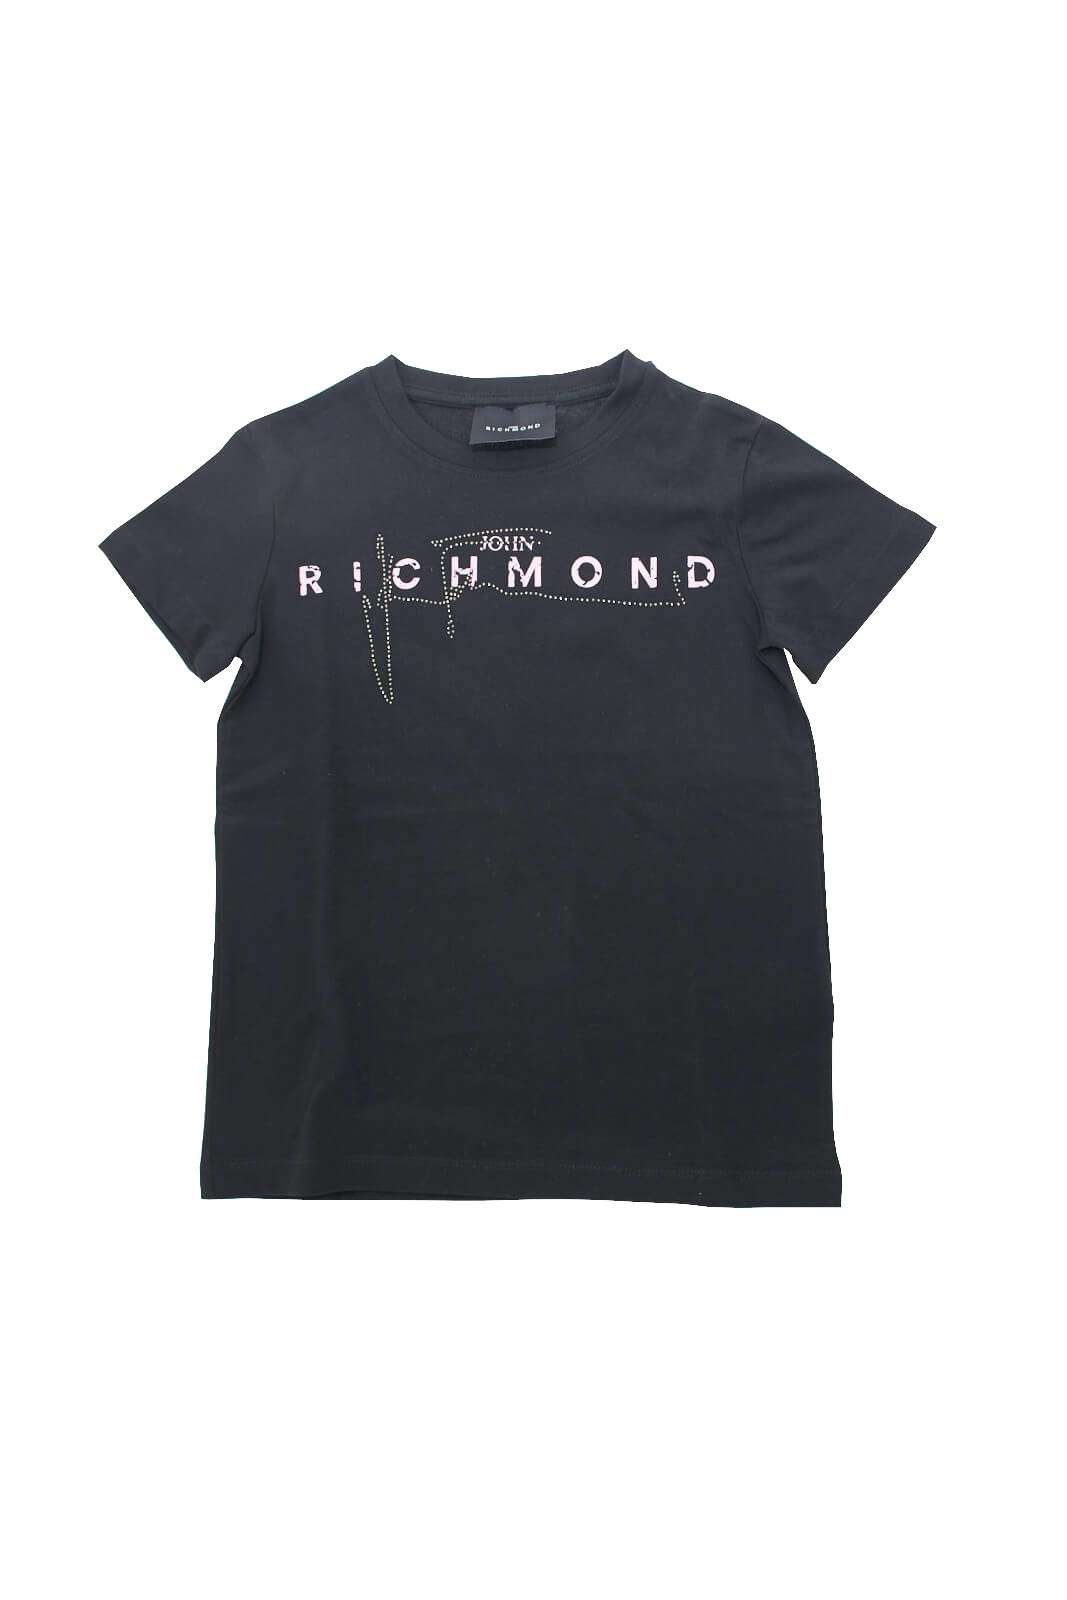 Richmond T Shirt for girls with rhinestones